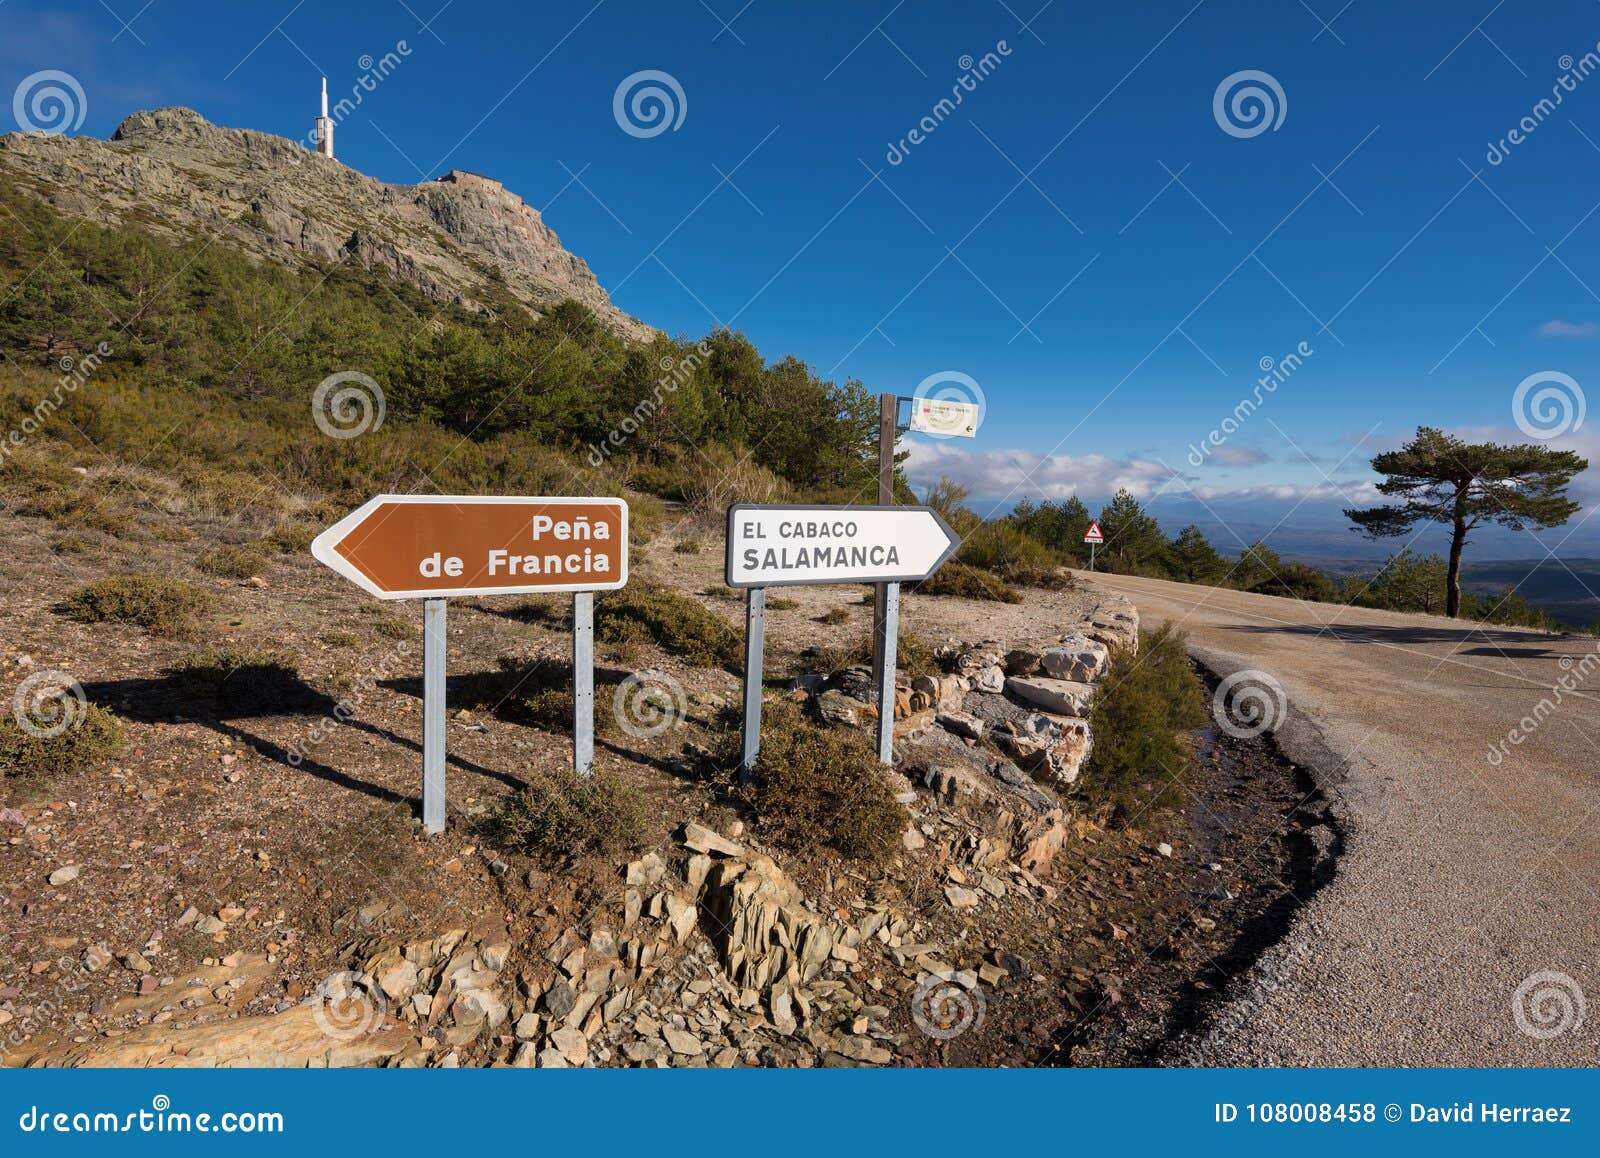 mountain landscape, road sign indication to pena de francia, salamanca, spain.